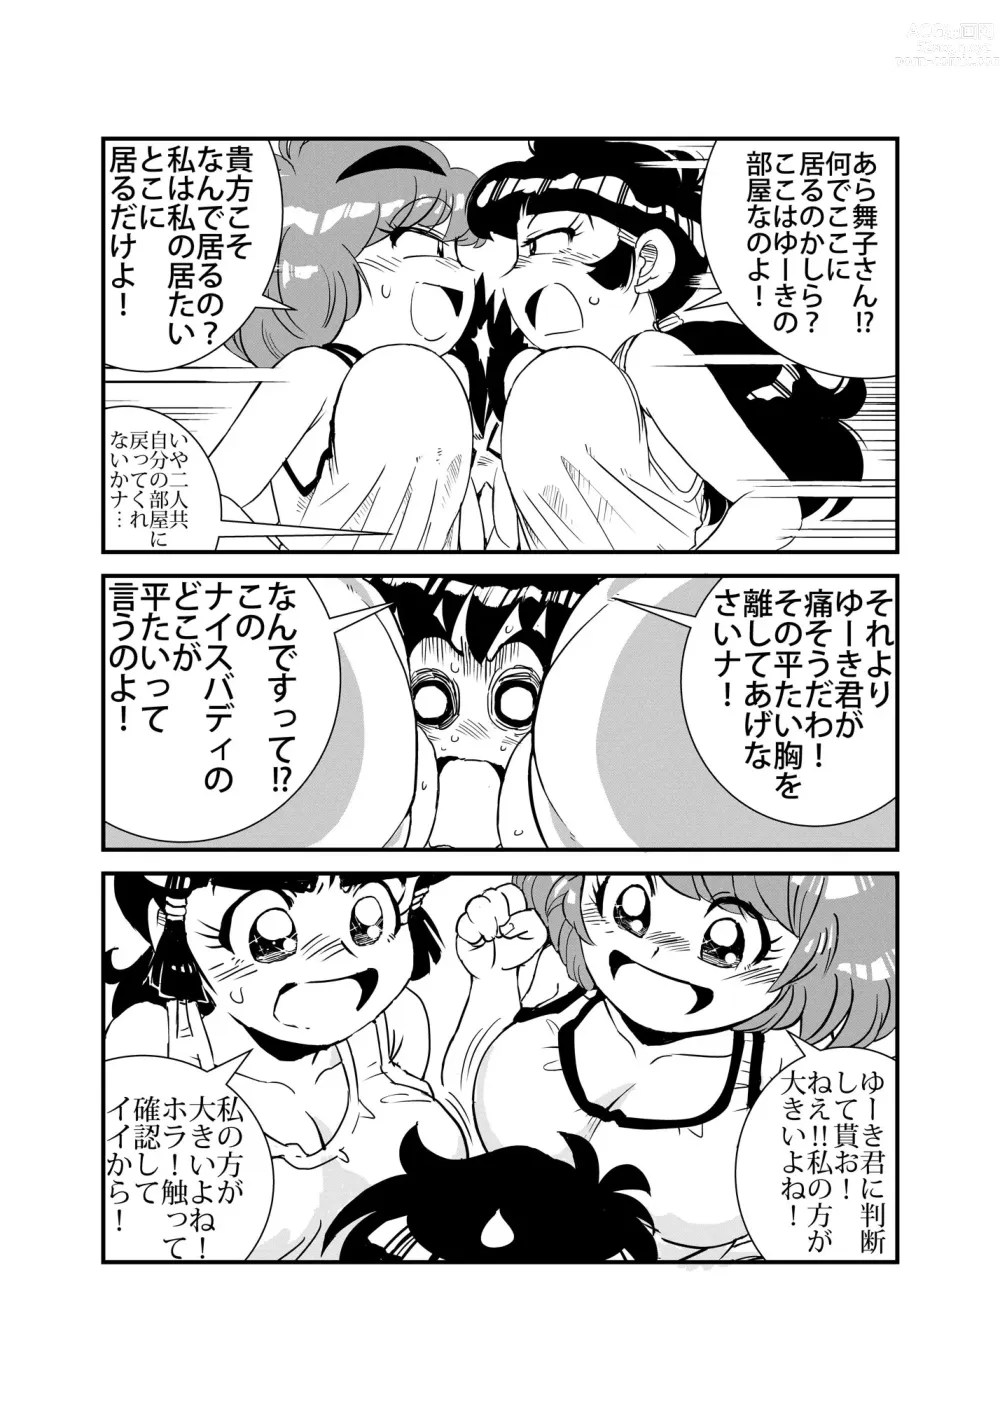 Page 5 of doujinshi Famicom no Ano Hito no Are